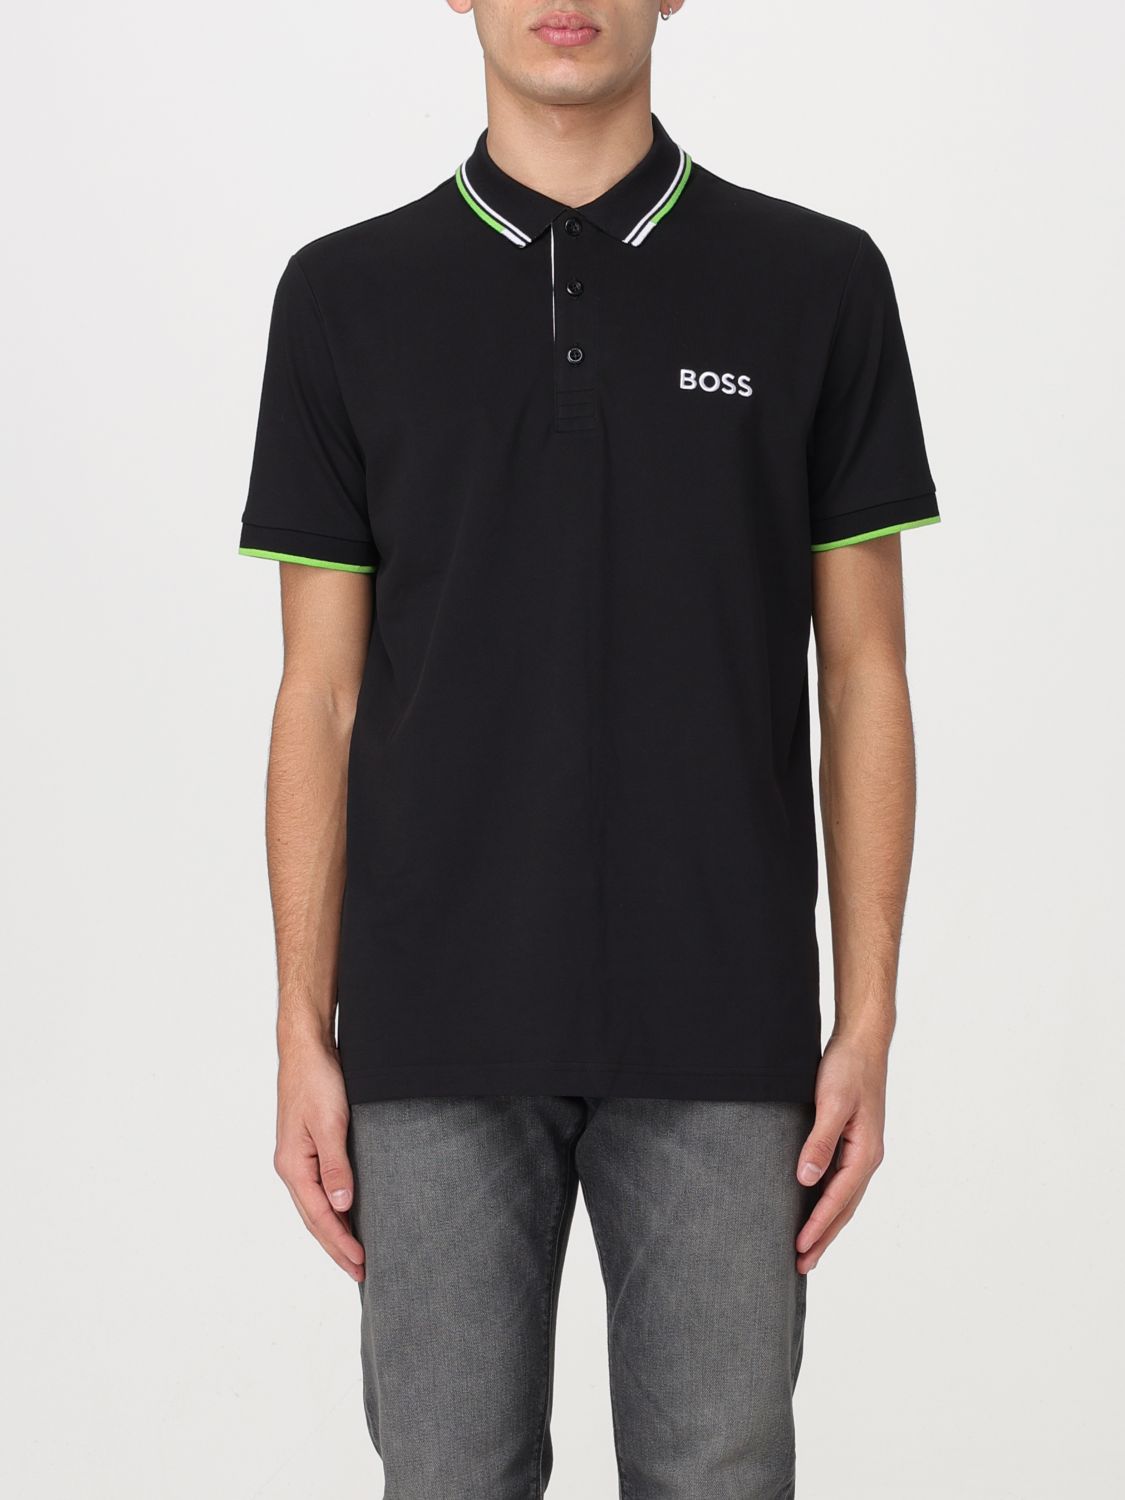 Hugo Boss Polo Shirt Boss Men Color Black